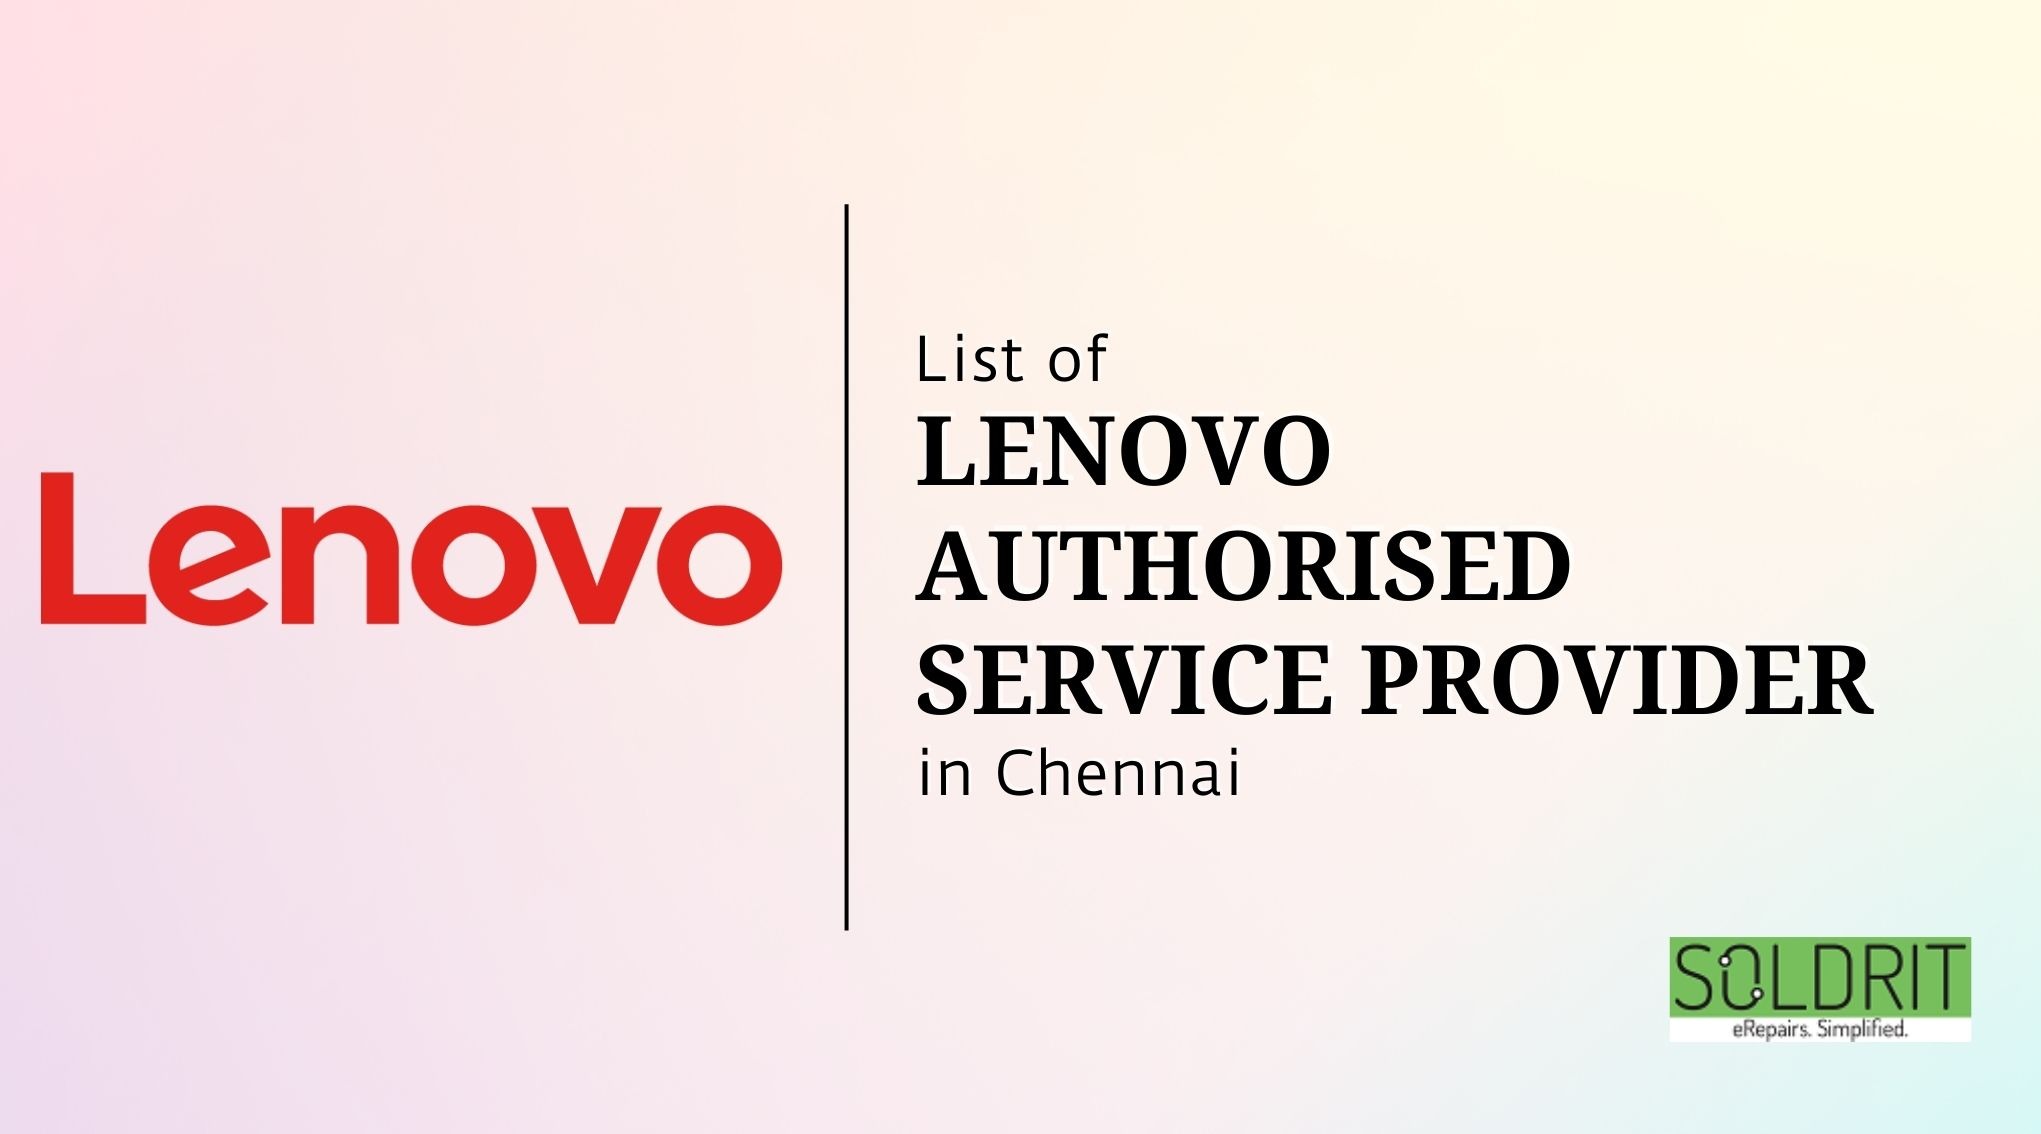 Lenovo Authorised Service Center Mumbai - Soldrit